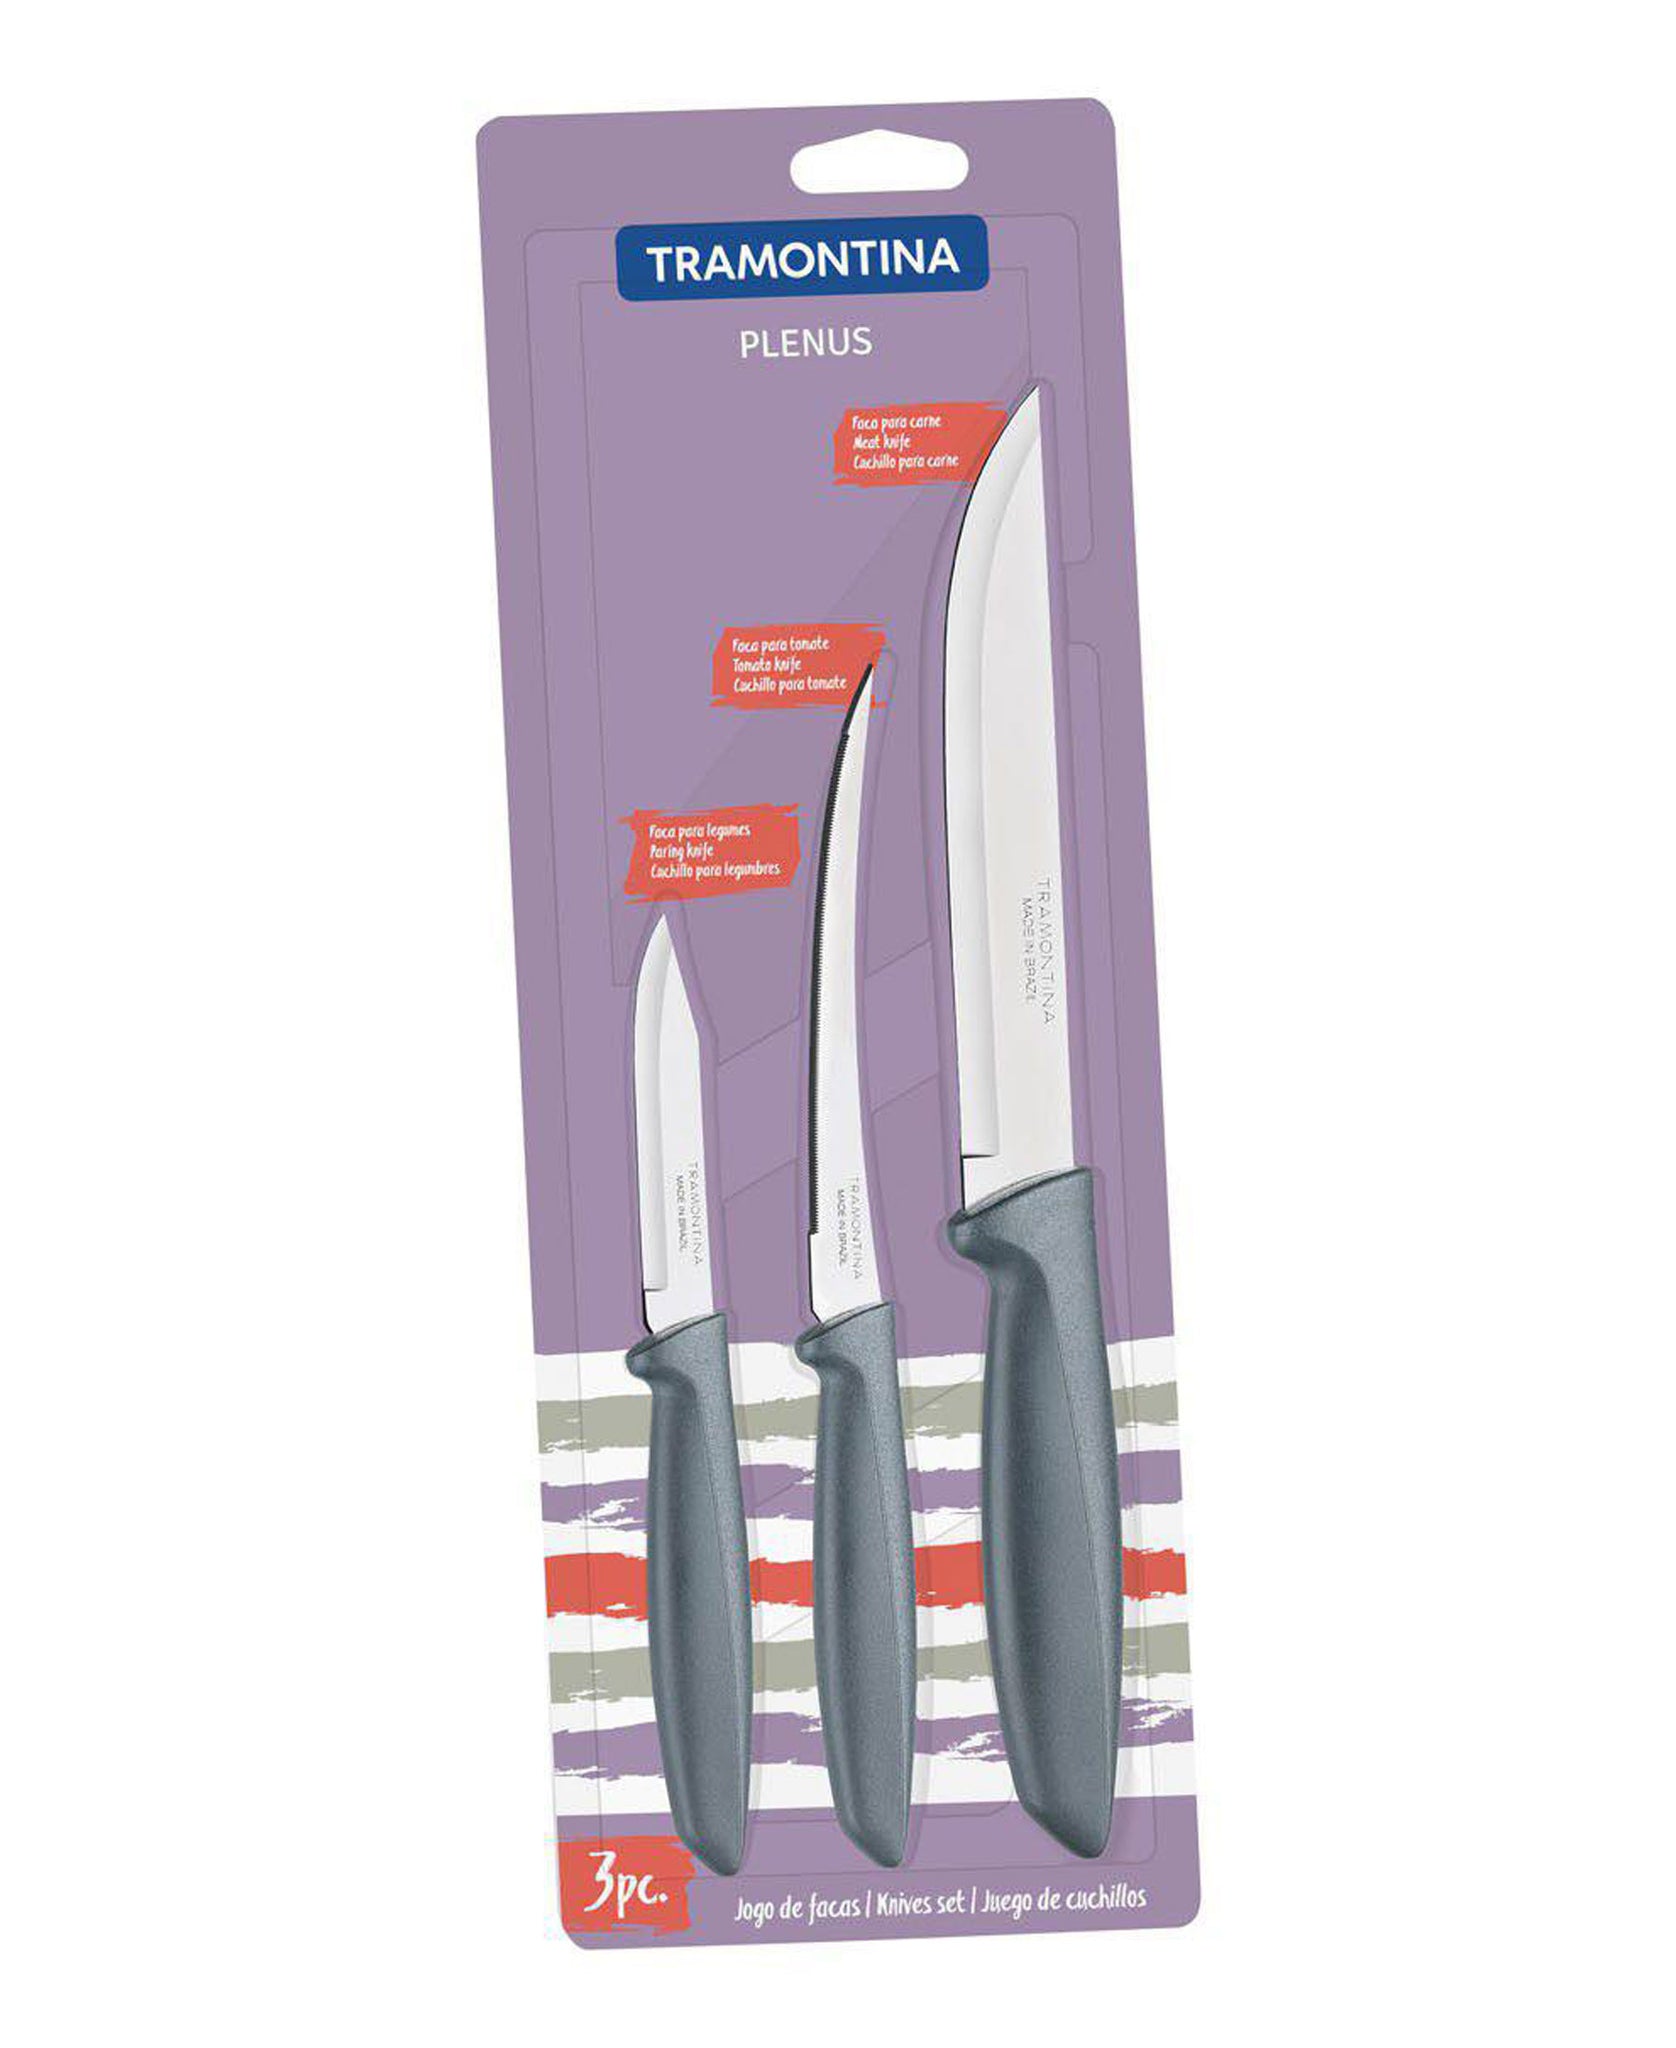 Tramontina Plenos Knife Set 3 Pieces - Grey